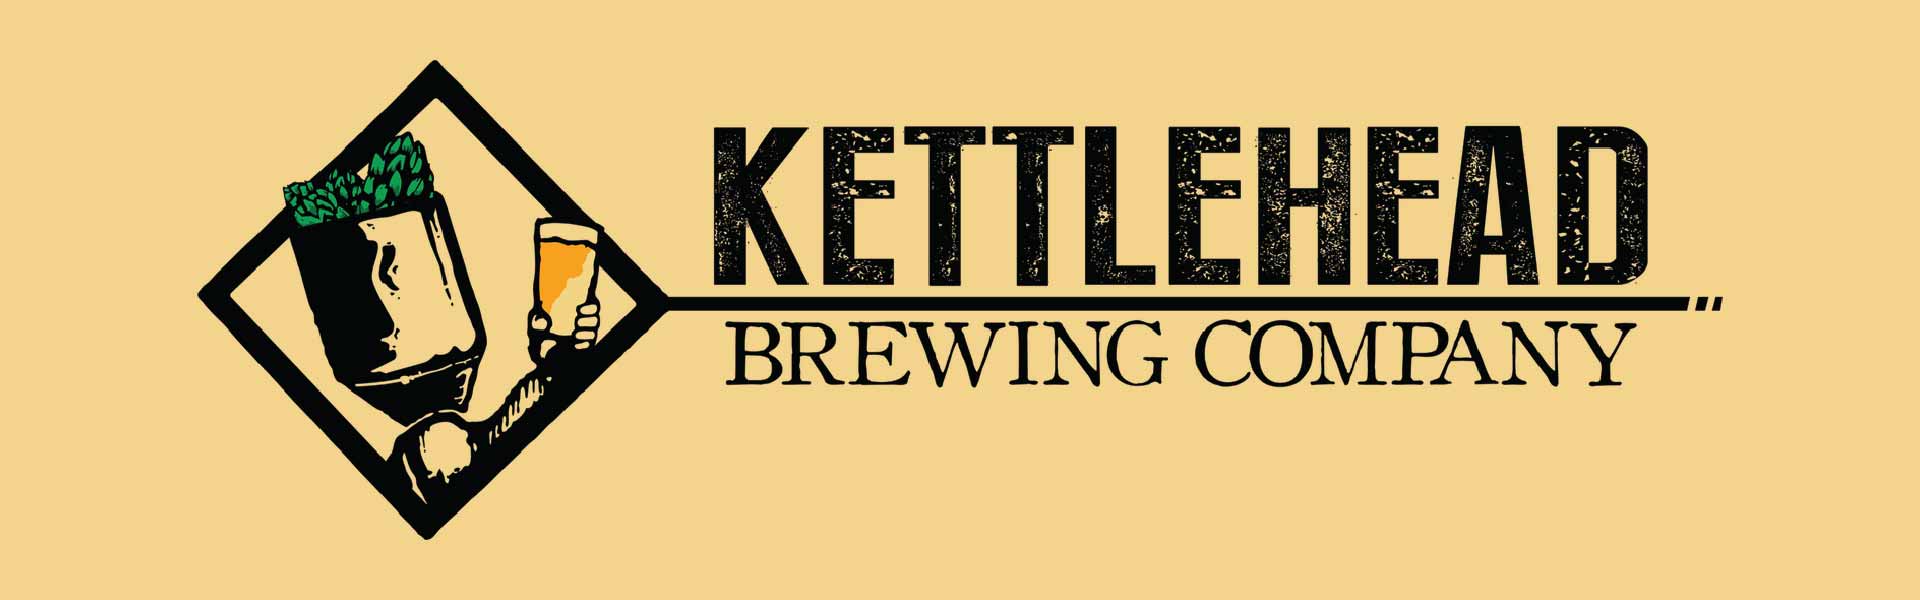 Kettlehead Brewing